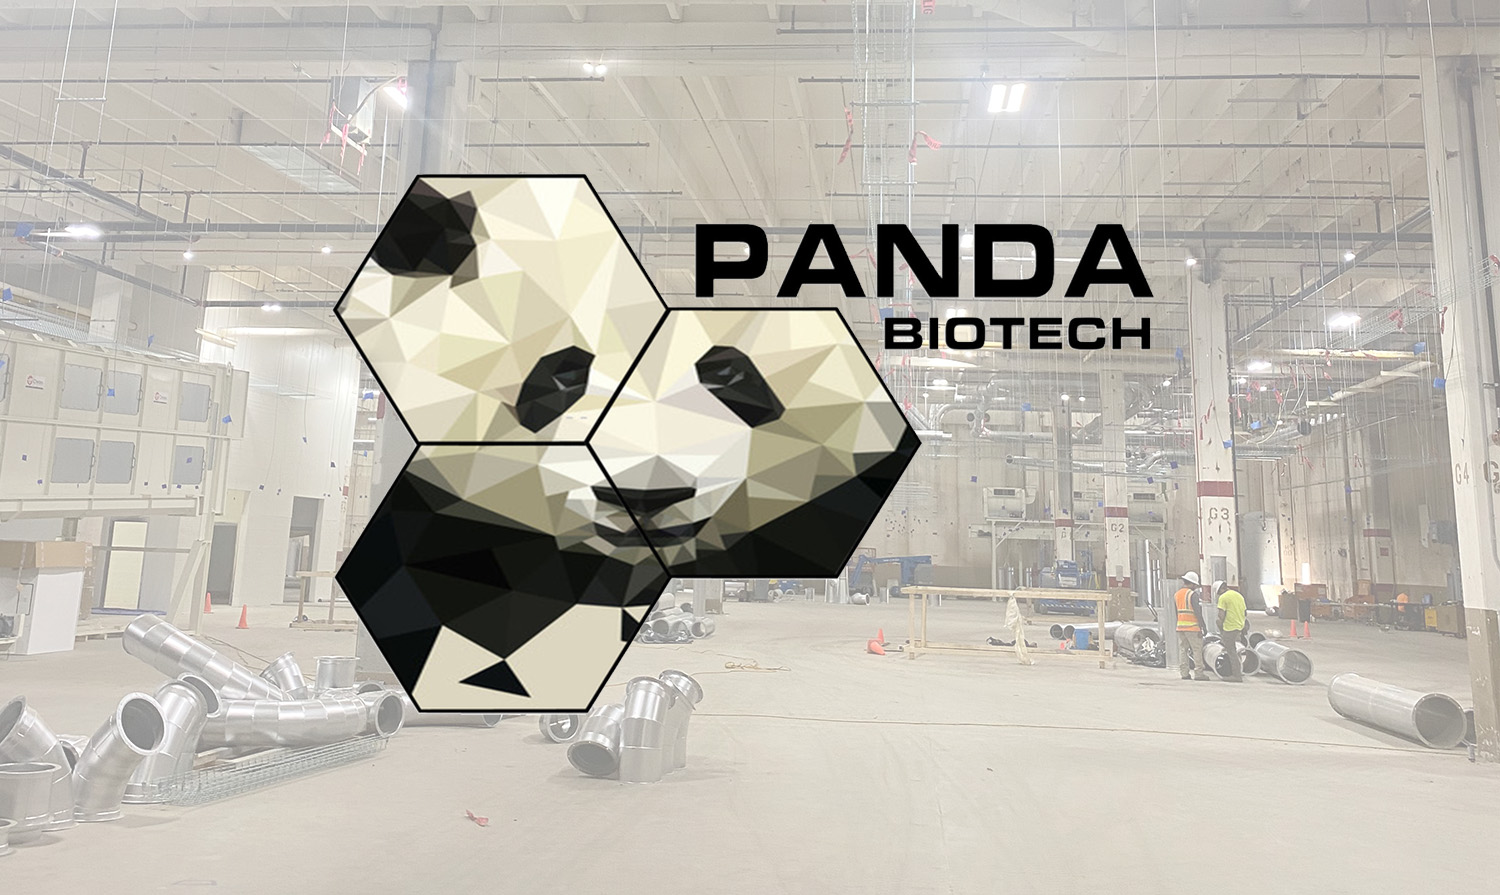 Panda biotech website